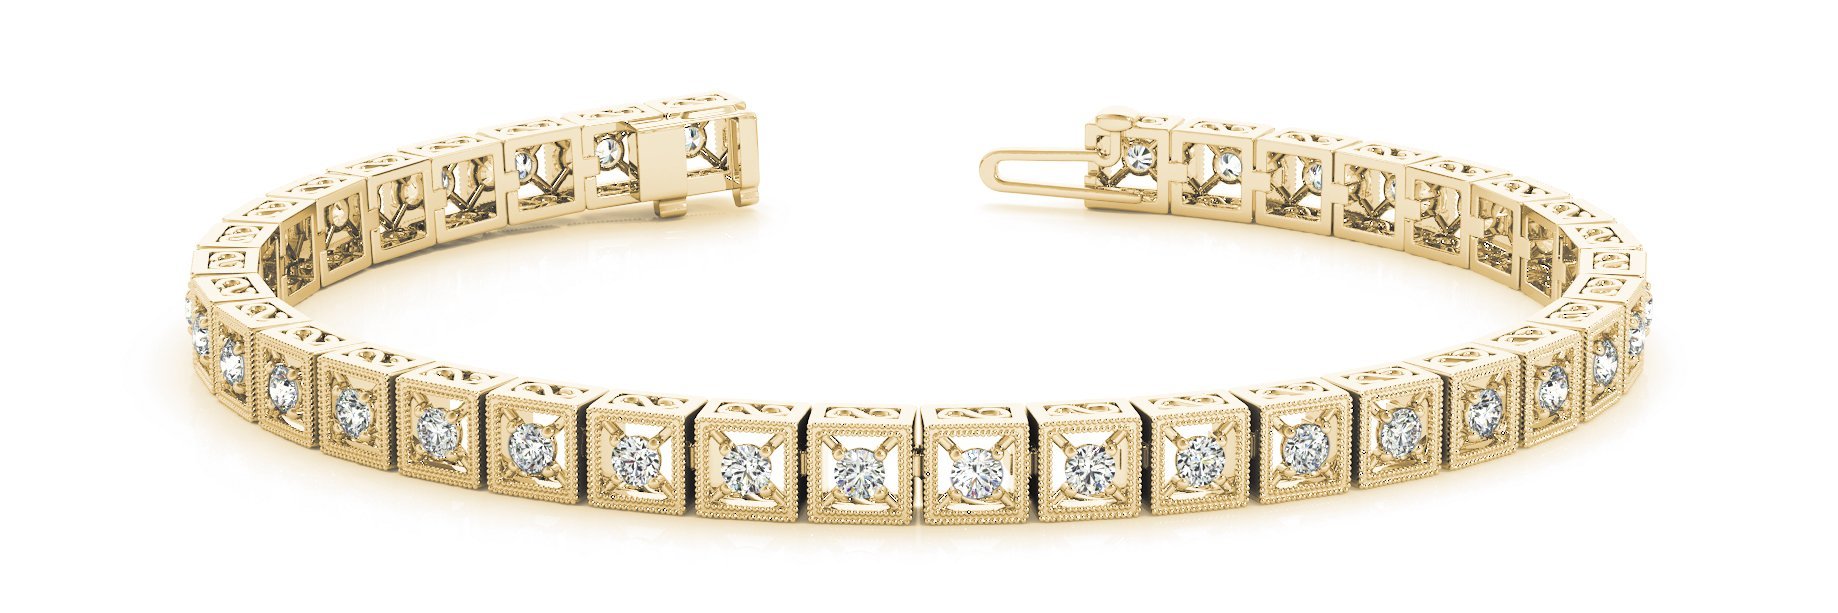 Fancy Diamond Bracelet Ladies 0.86ct tw - 14kt Gold